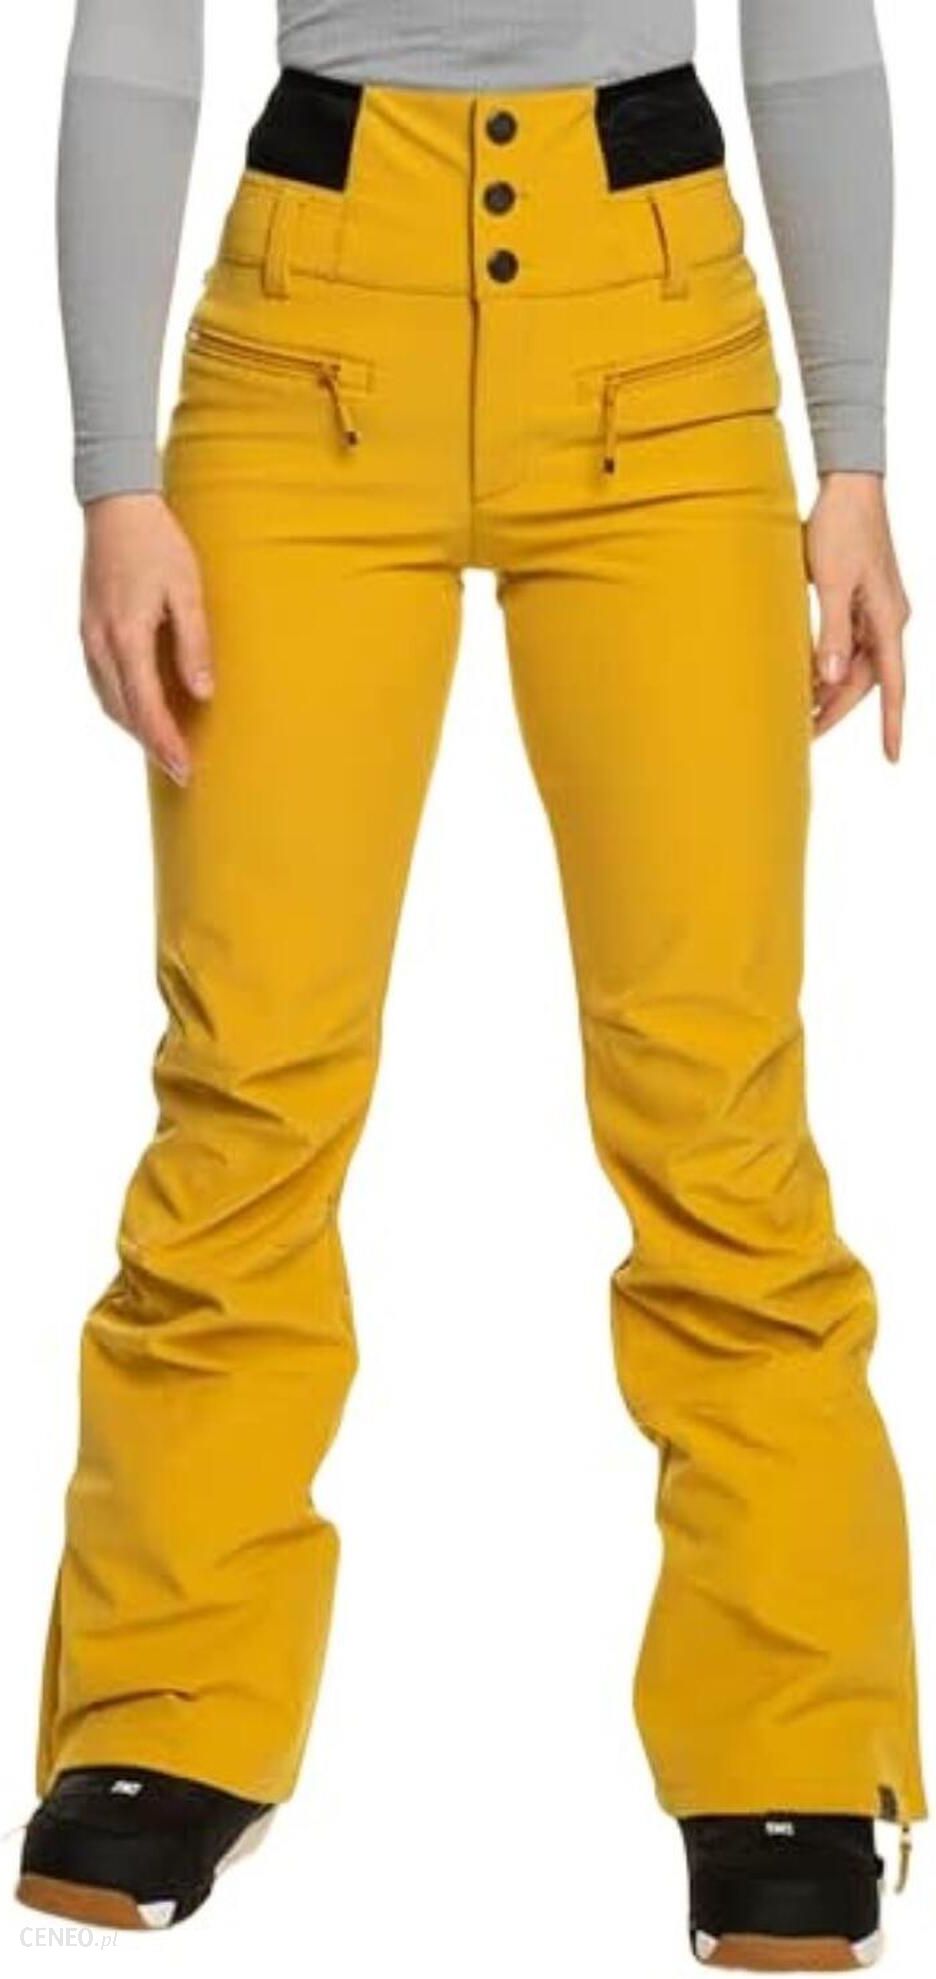 ROXY-DIVERSION GIRL SNPT DUSTY ROSE - Ski trousers